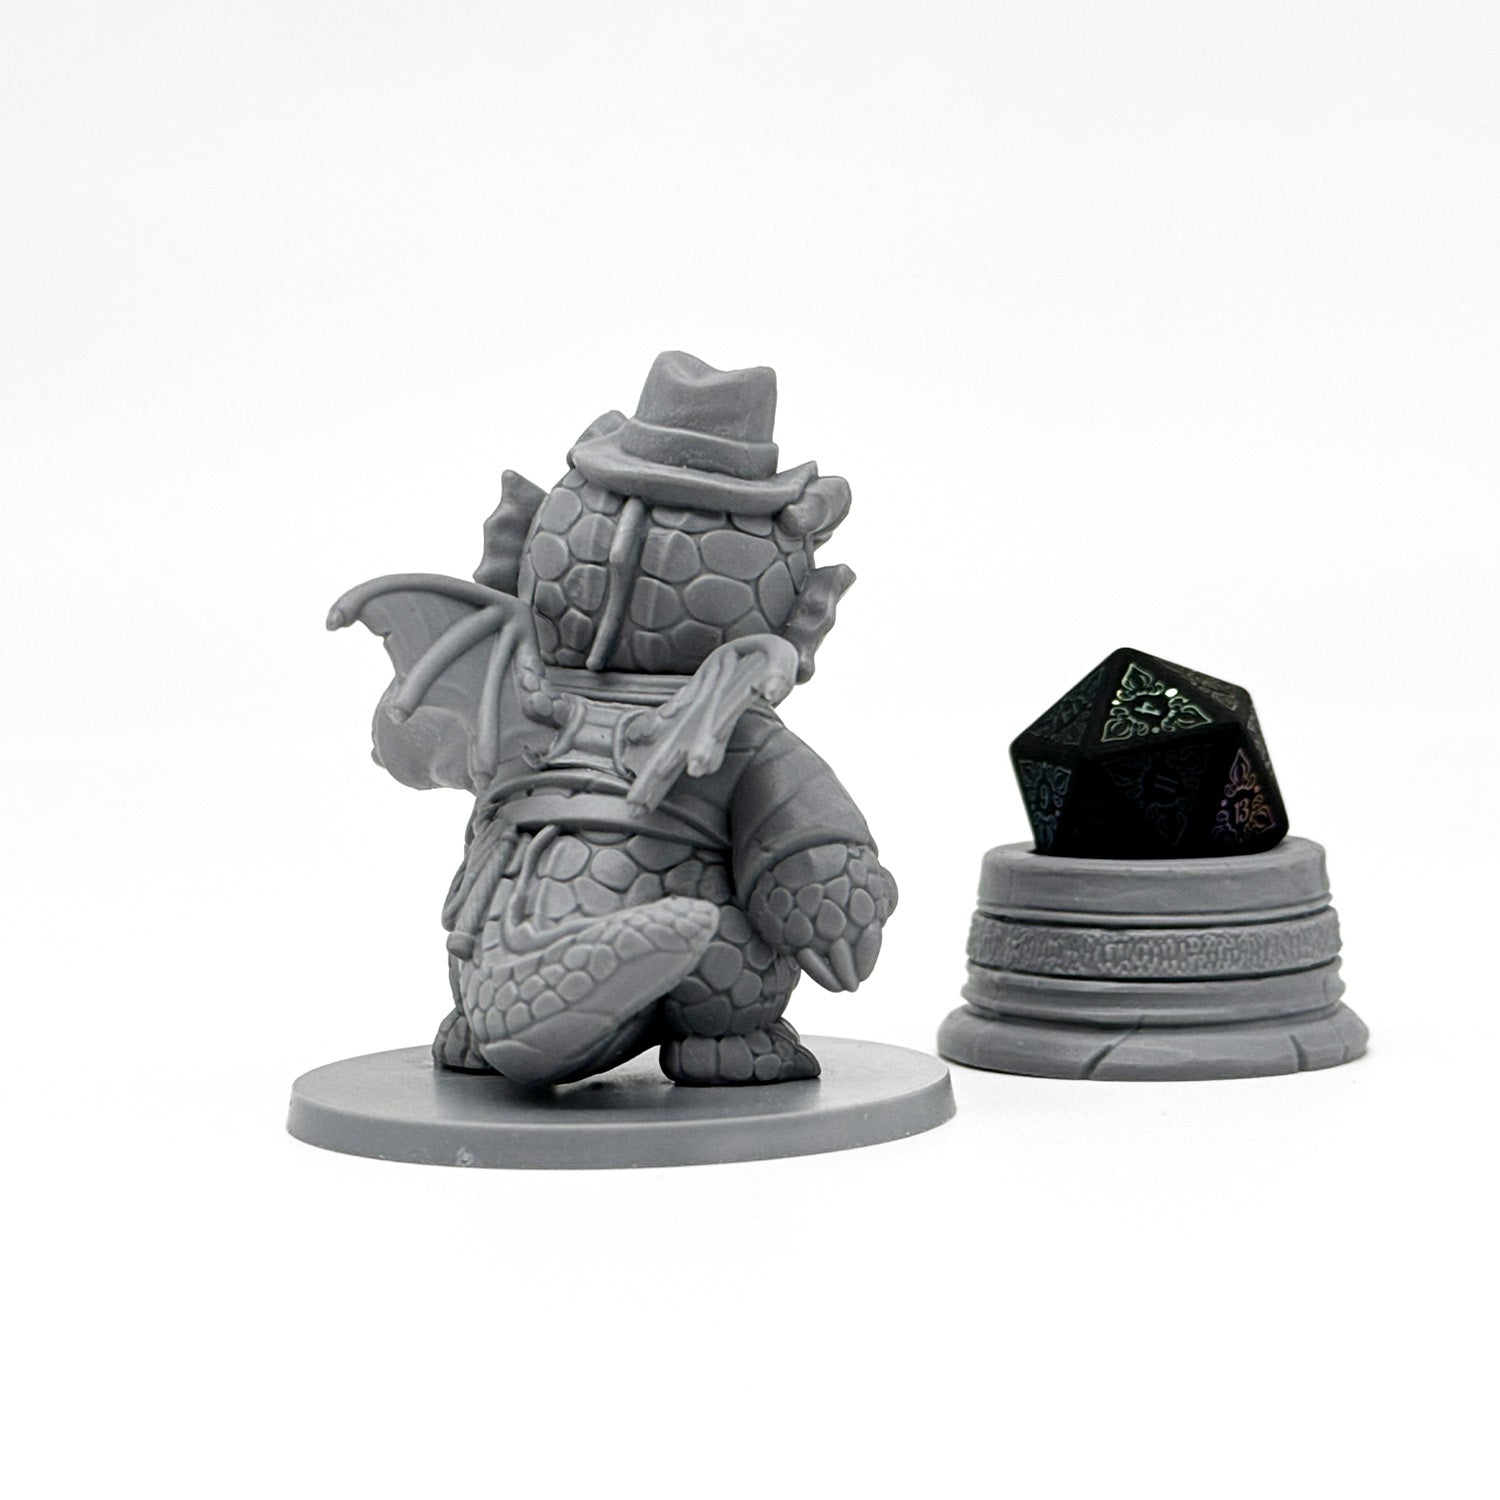 Dragon Antiquarian Die Holder - Miniature by Adventurers and Adversaries